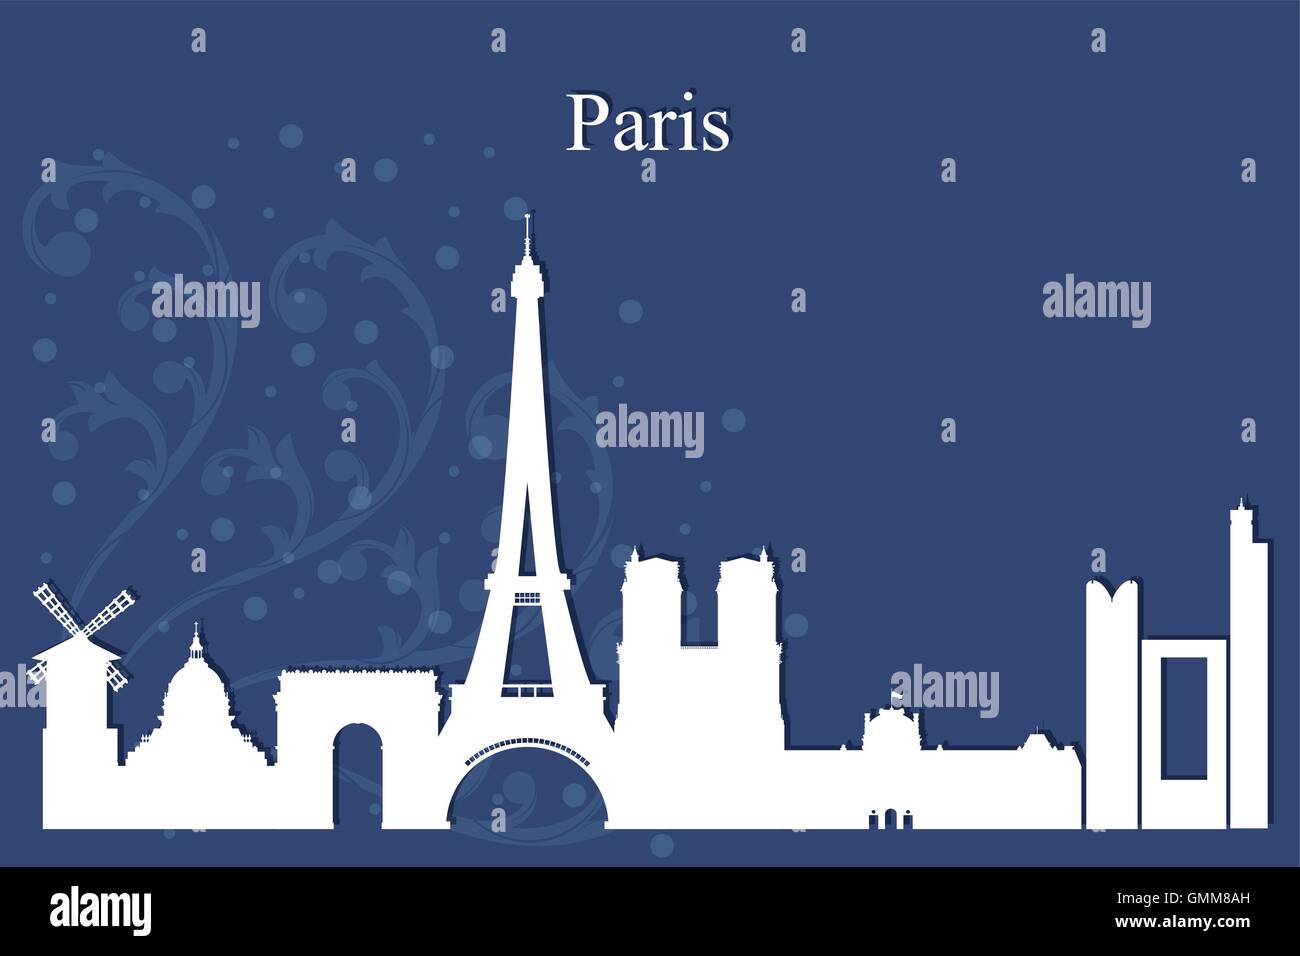 Paris city skyline silhouette on blue background Stock Vector